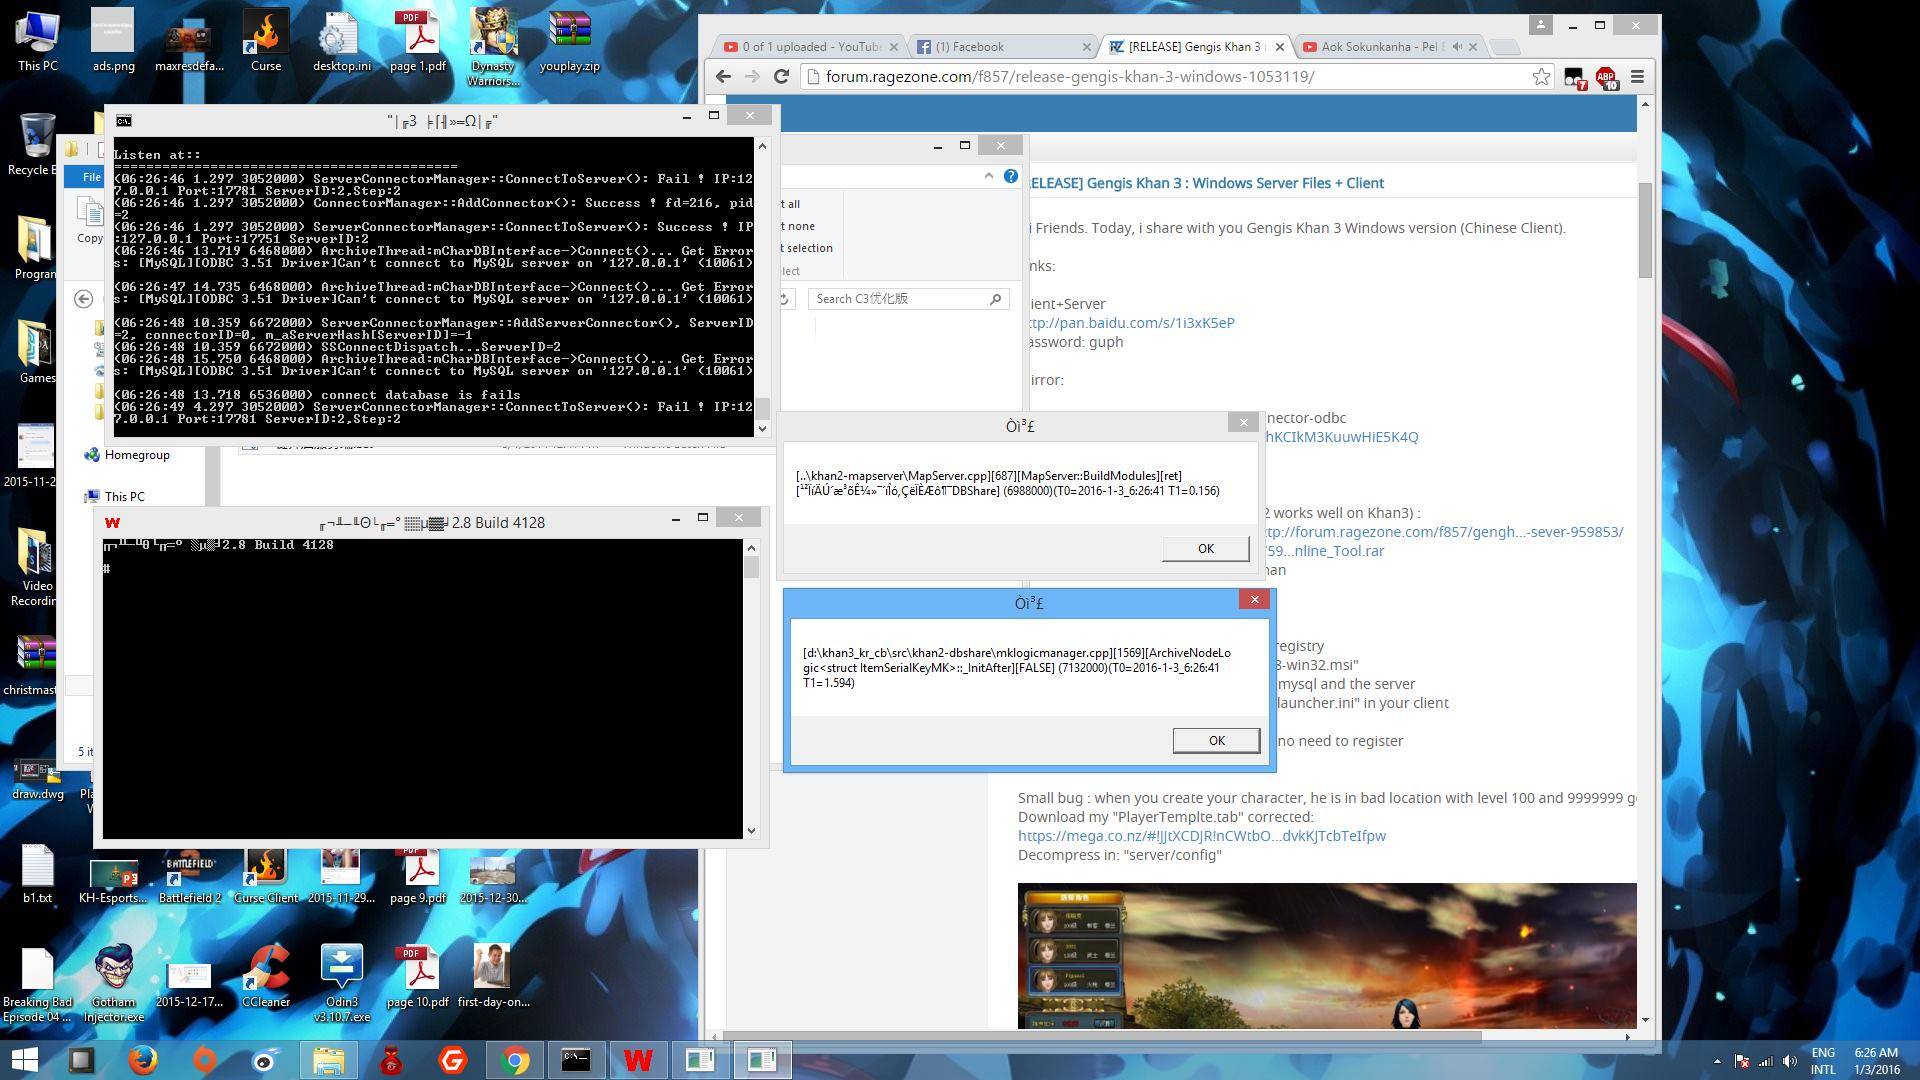 UouqZ1 - Gengis Khan 3 : Windows Server Files + Client - RaGEZONE Forums